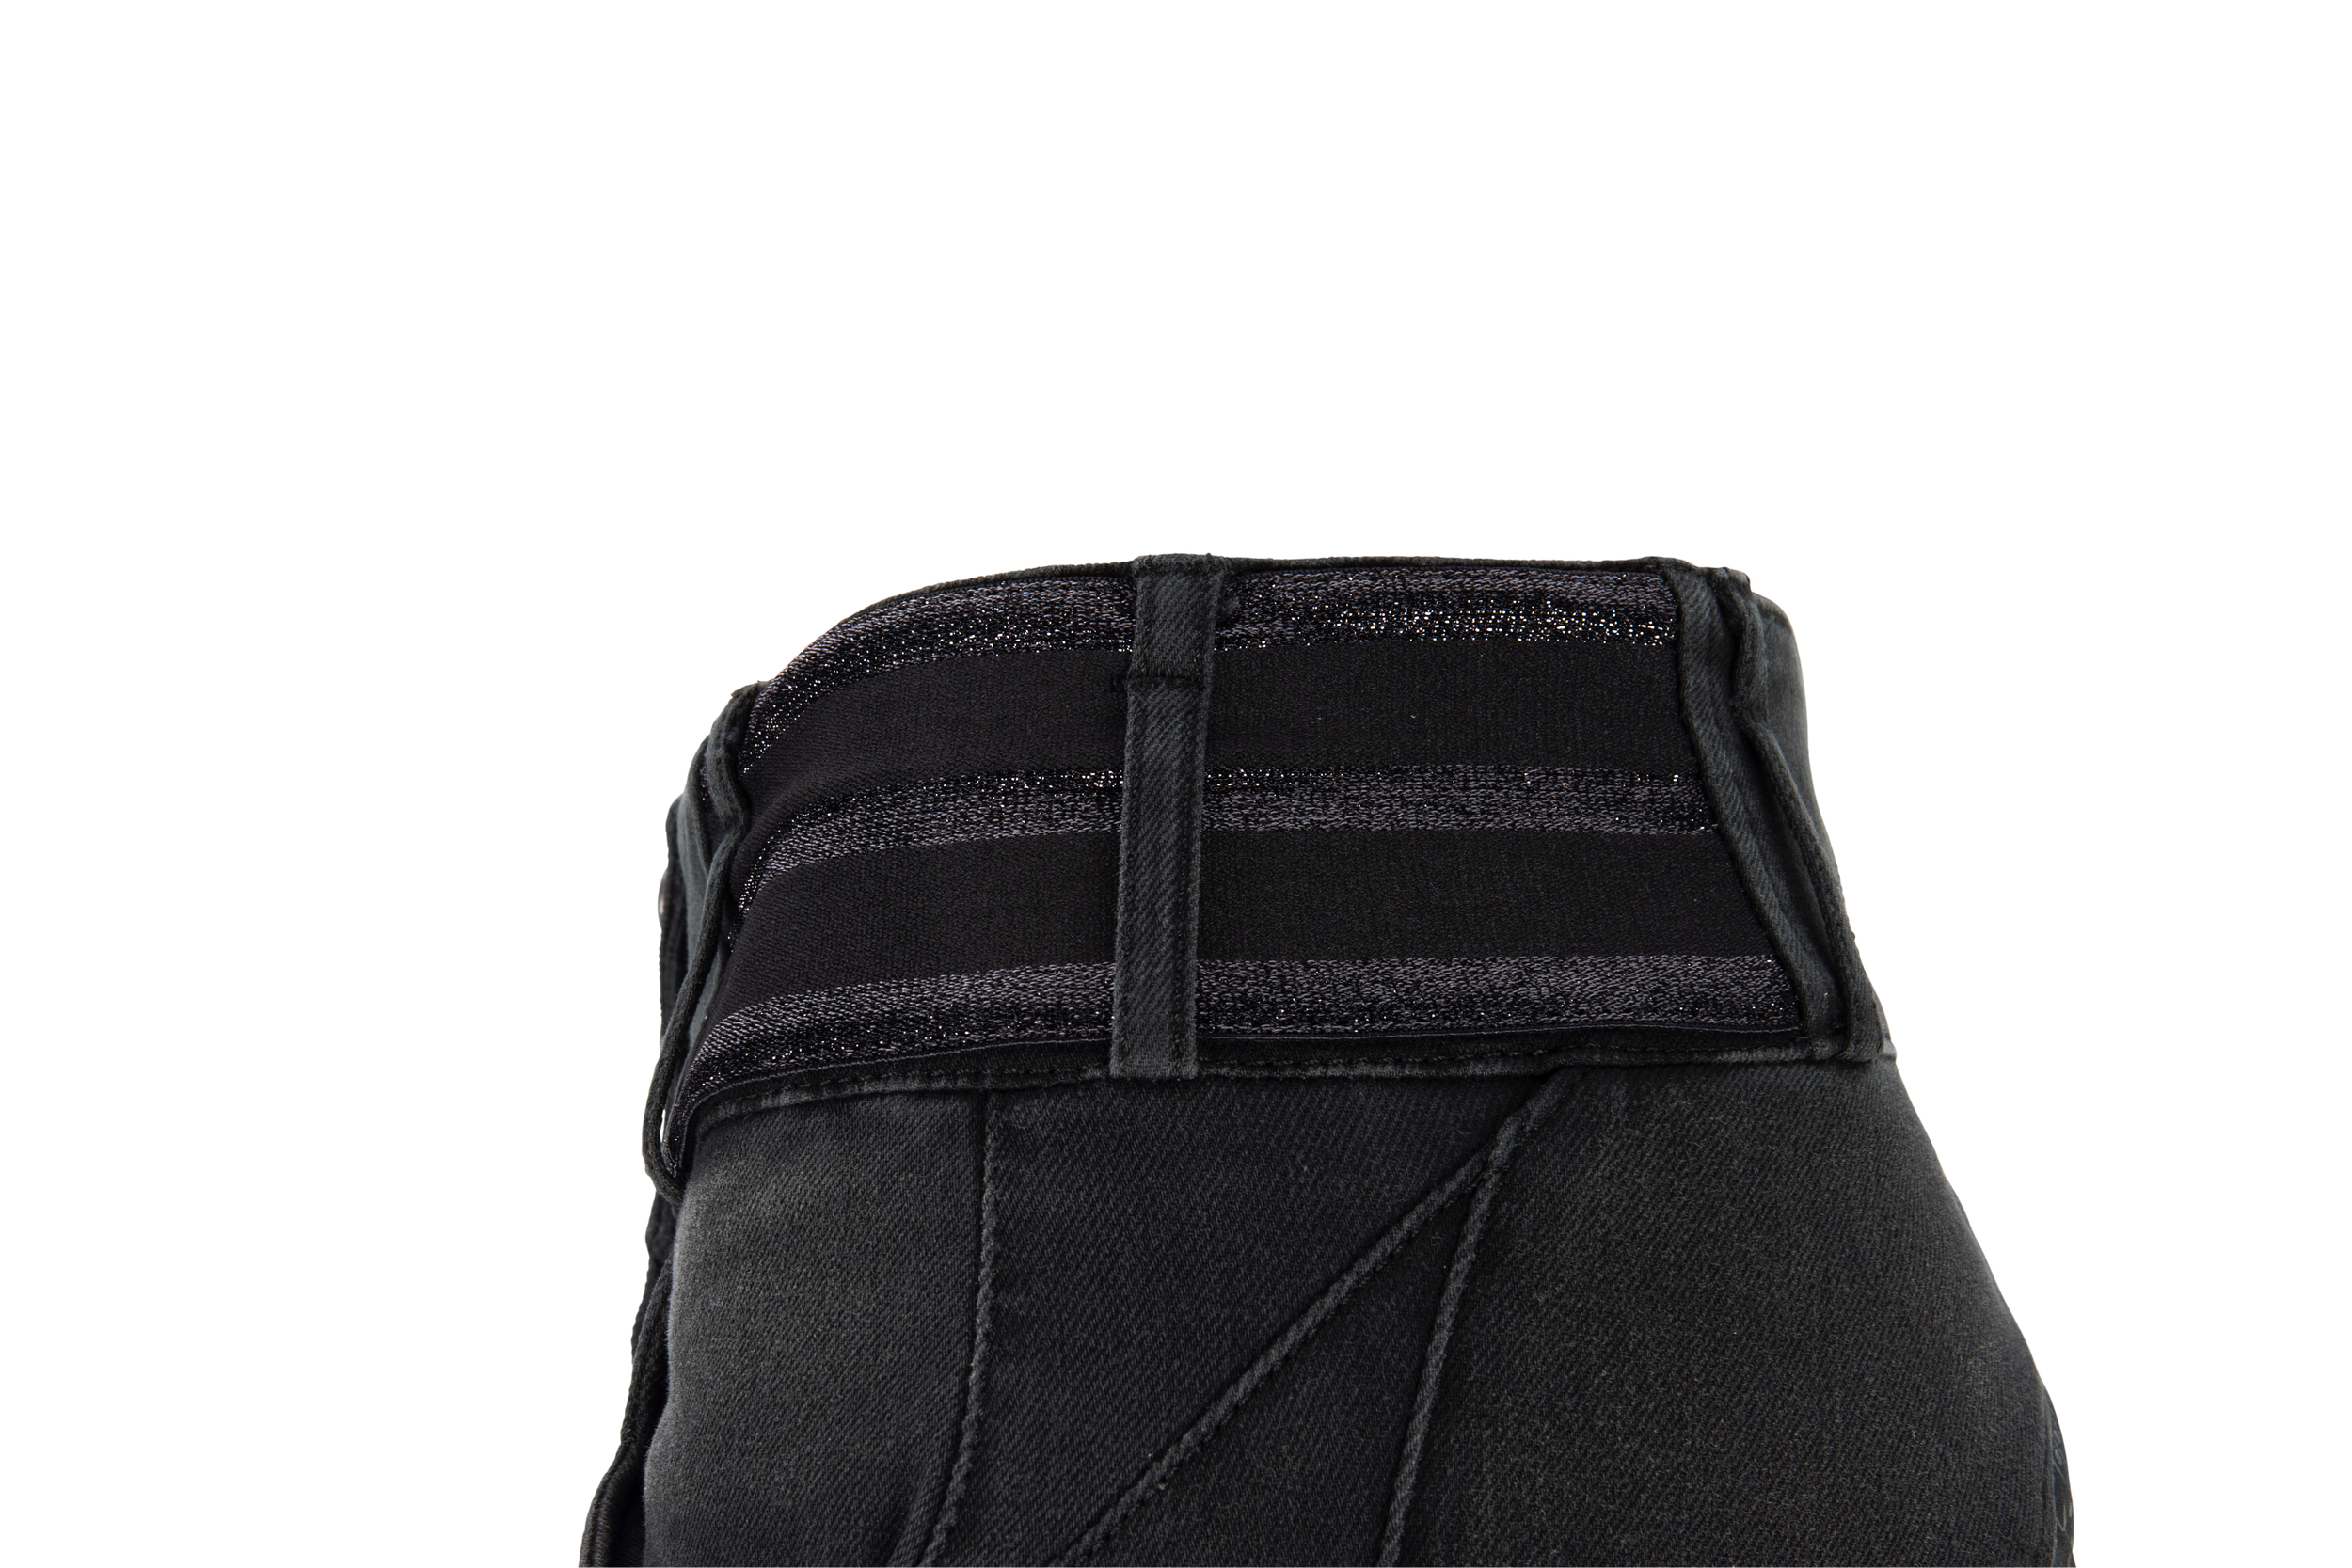 Jeans-Reithose CANDELA GRIP, Ganzbesatz, schwarz